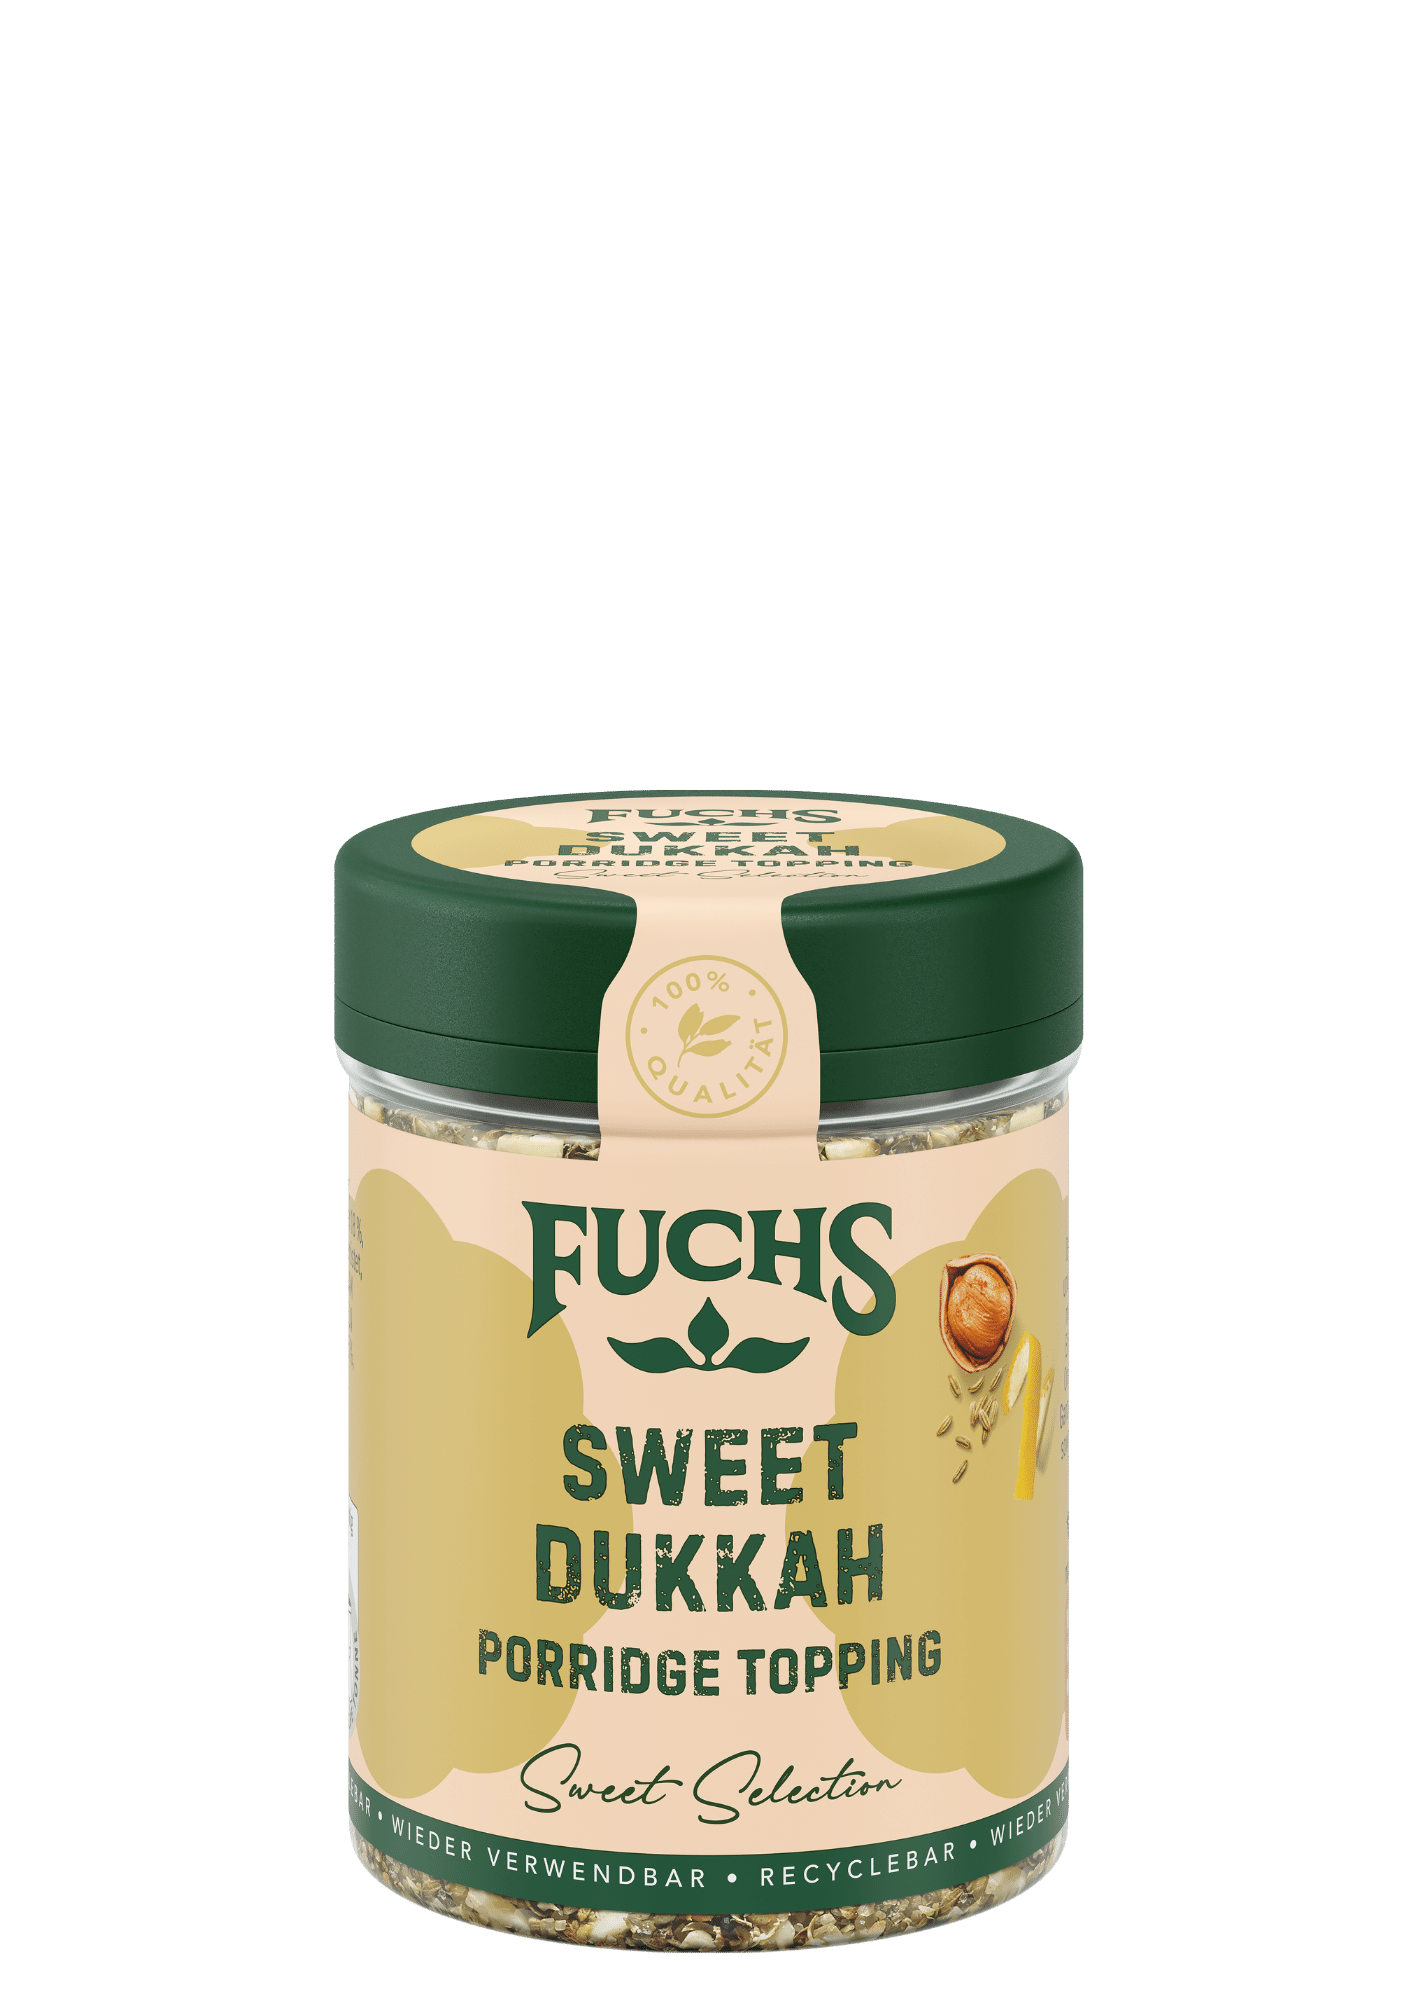 Sweet Dukkah Porridge Topping